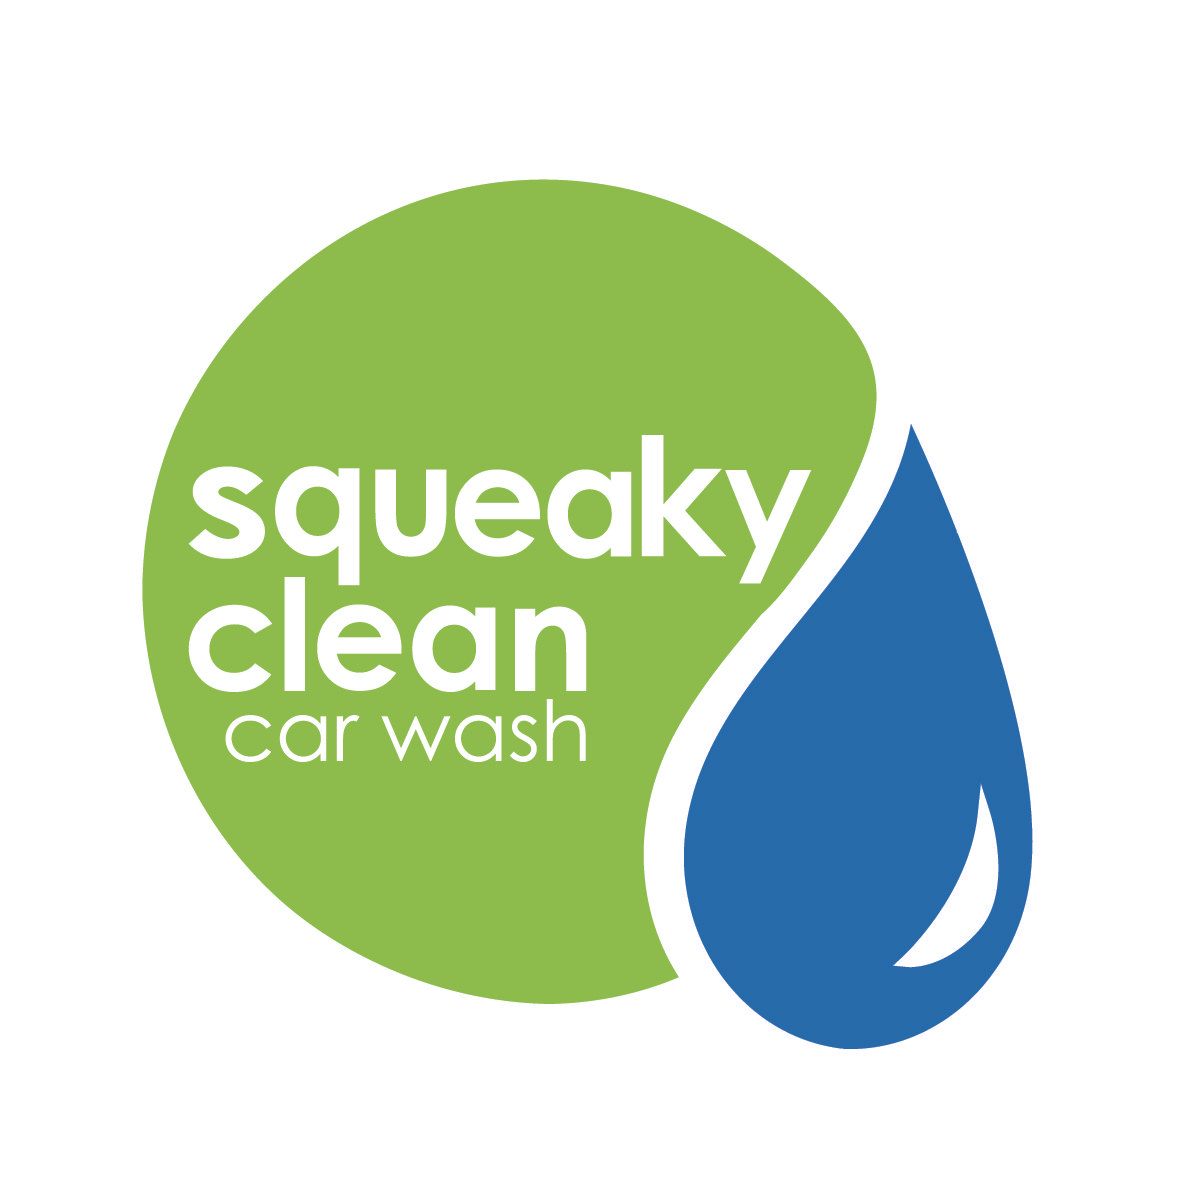 squeaky clean carwash logo